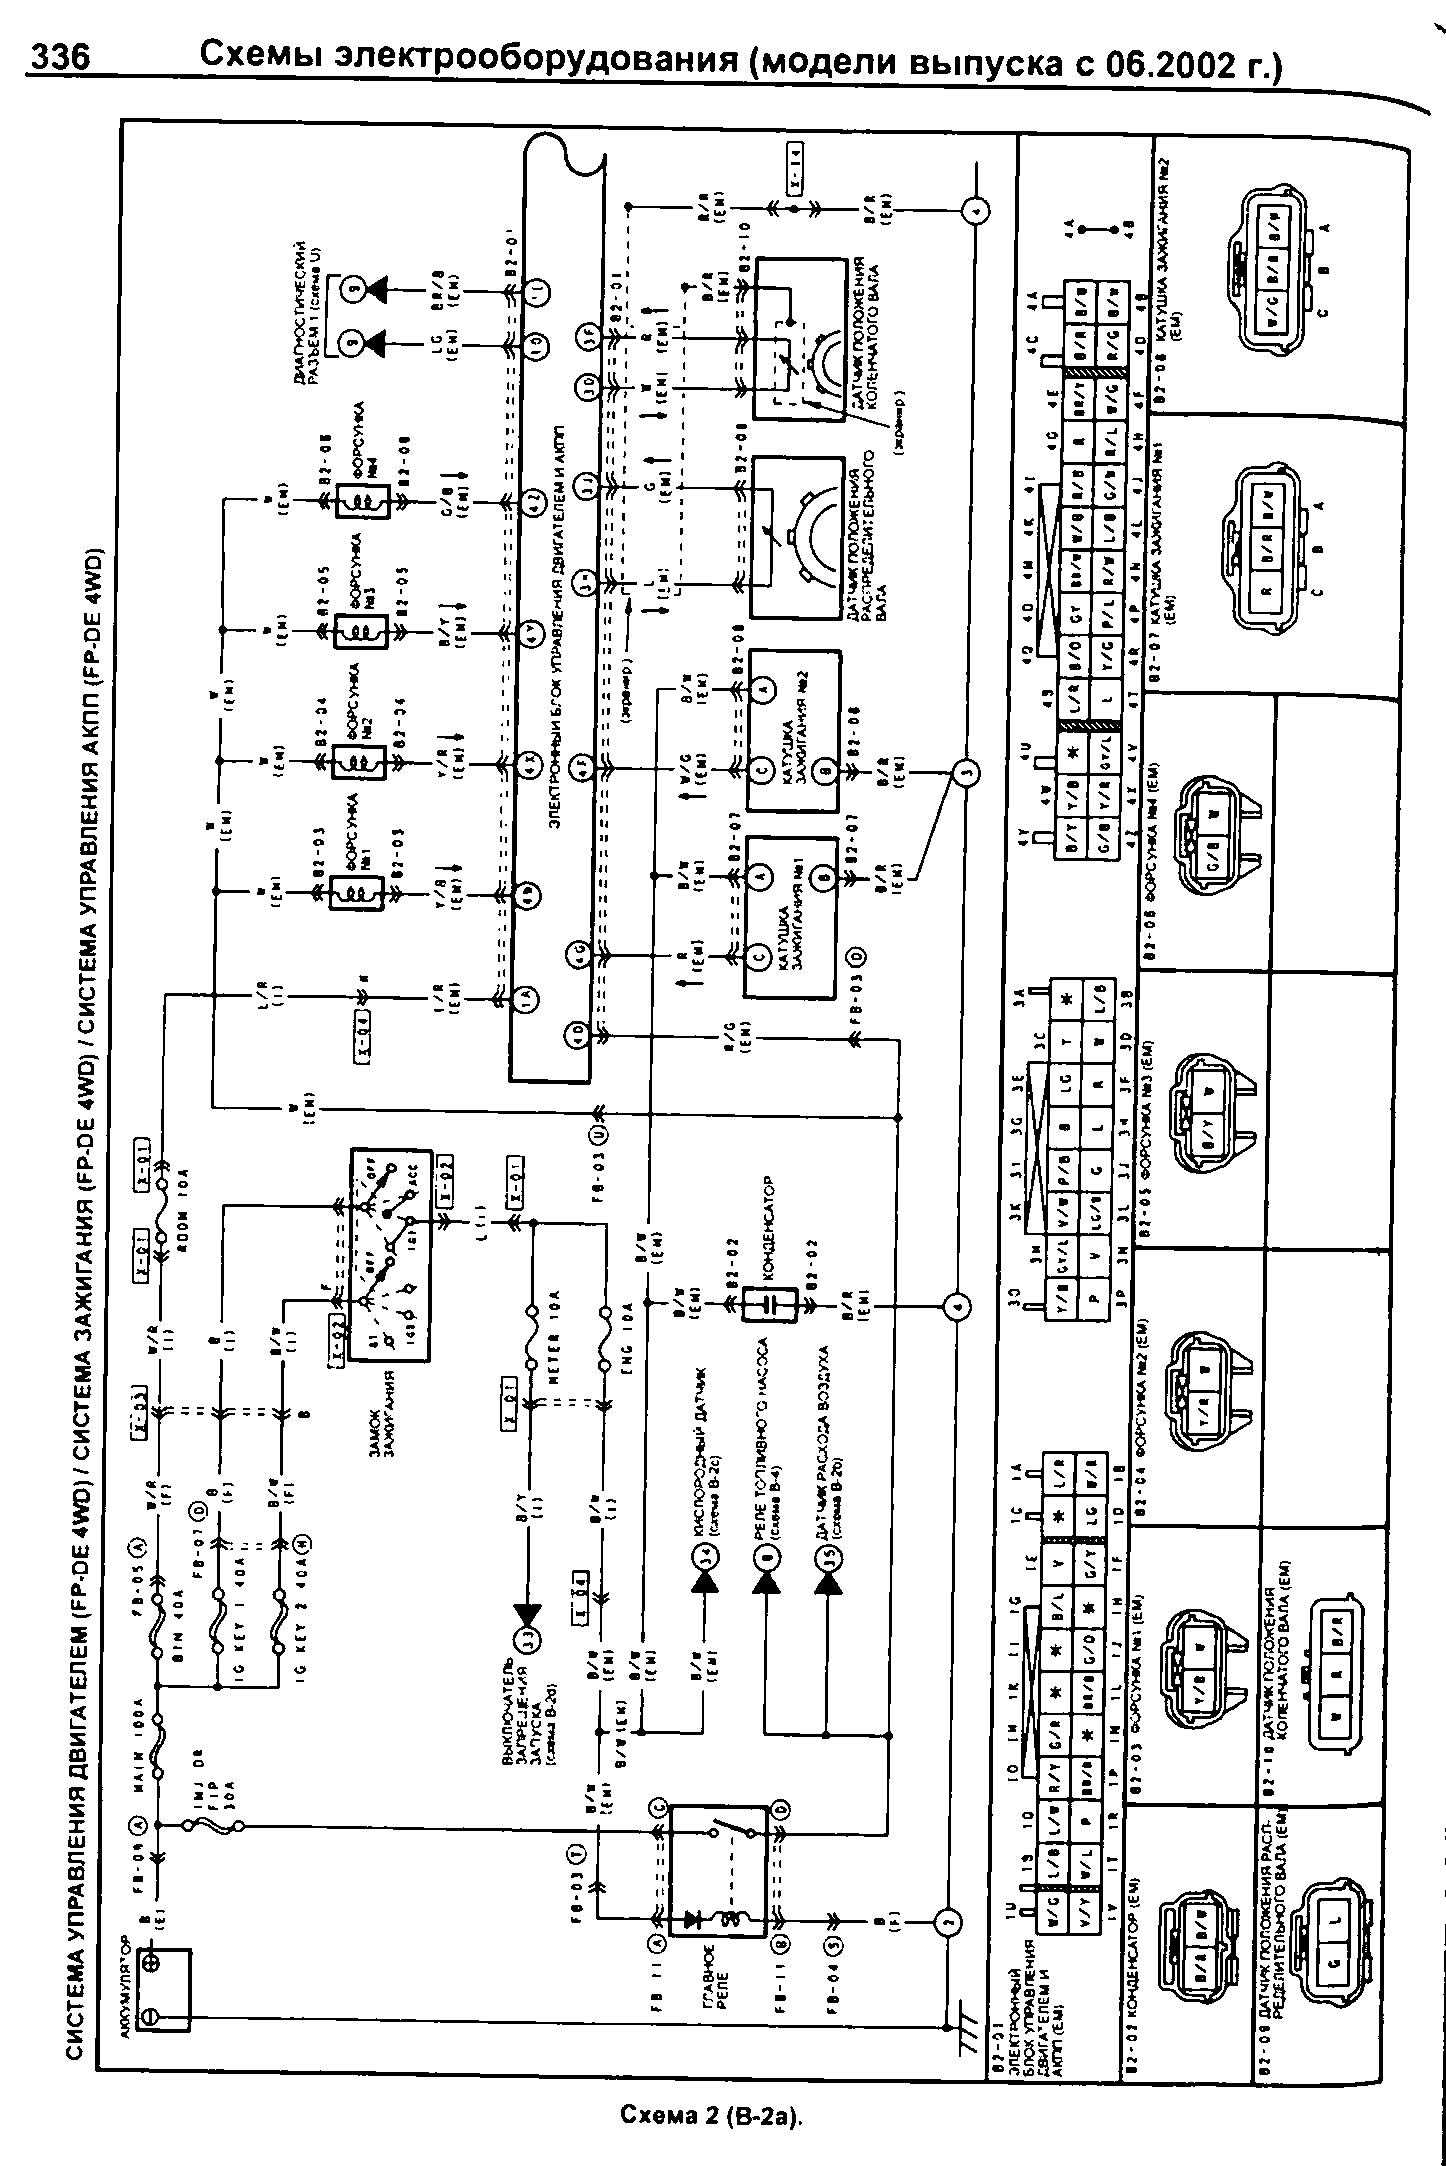 Мазда 626 ge (1991-1998): электрическая схема